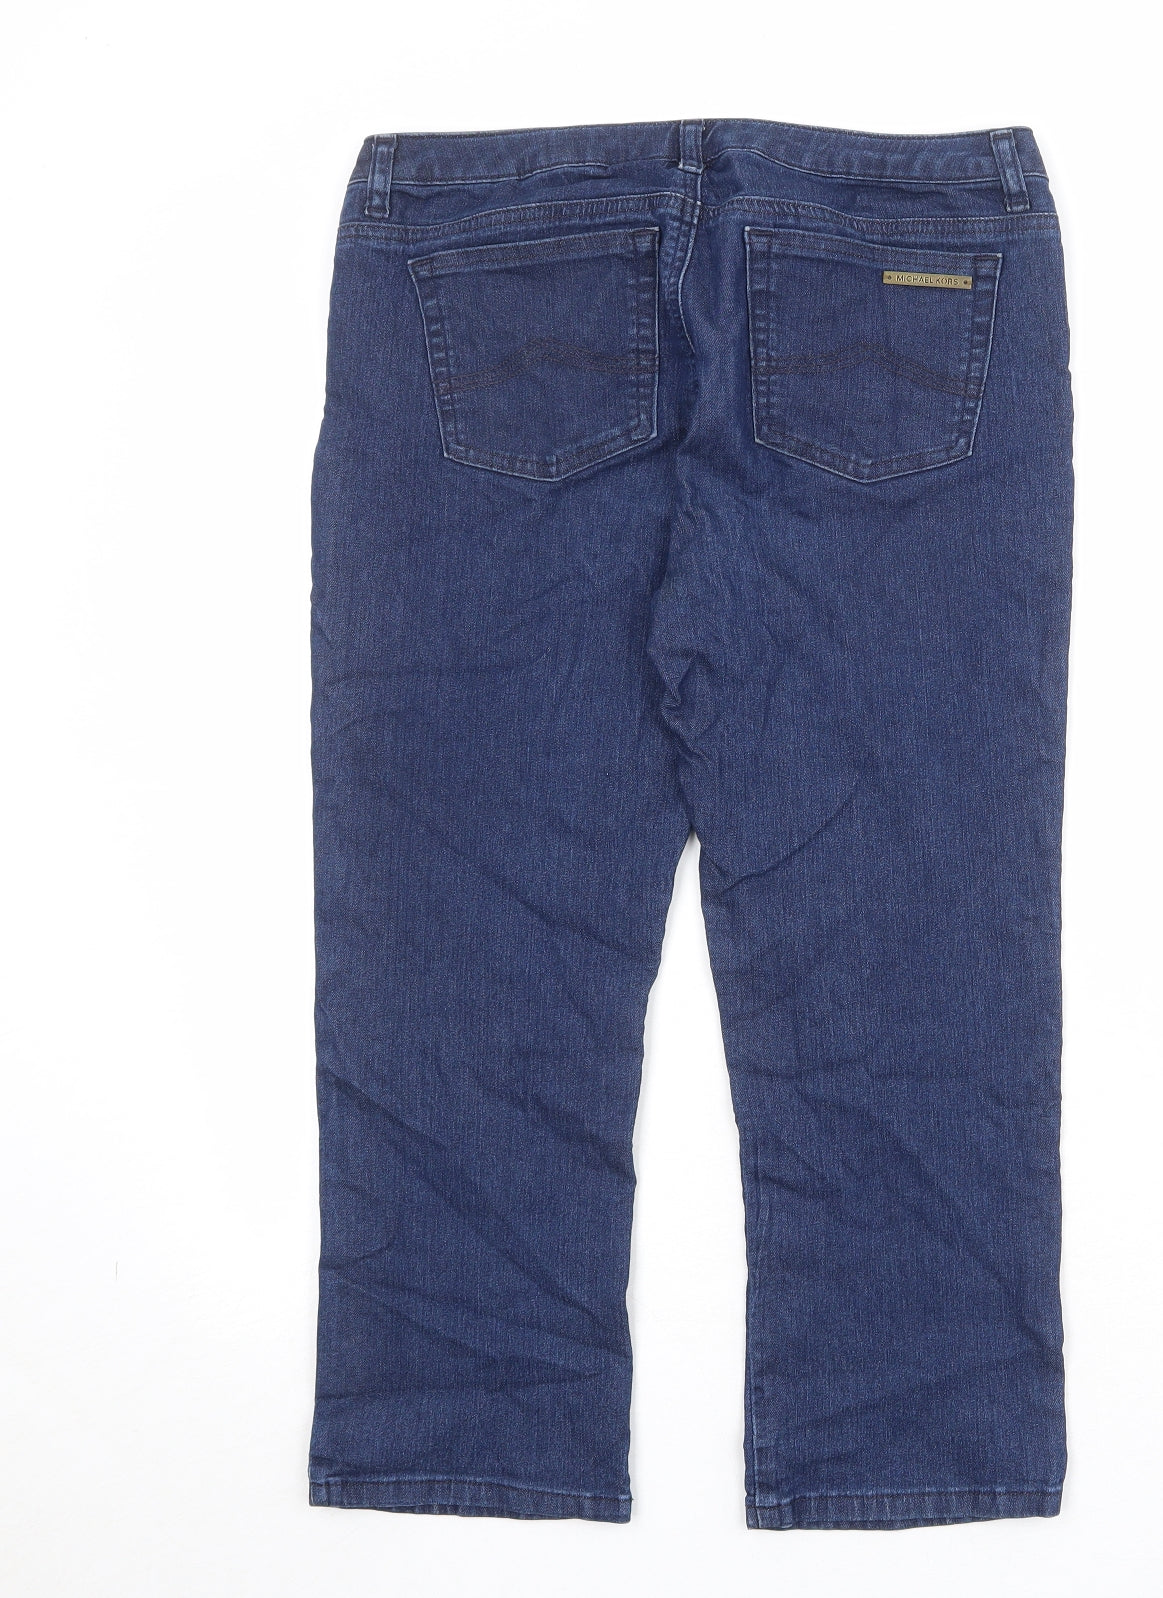 Michael Kors Womens Blue Cotton Straight Jeans Size 30 in Regular Zip